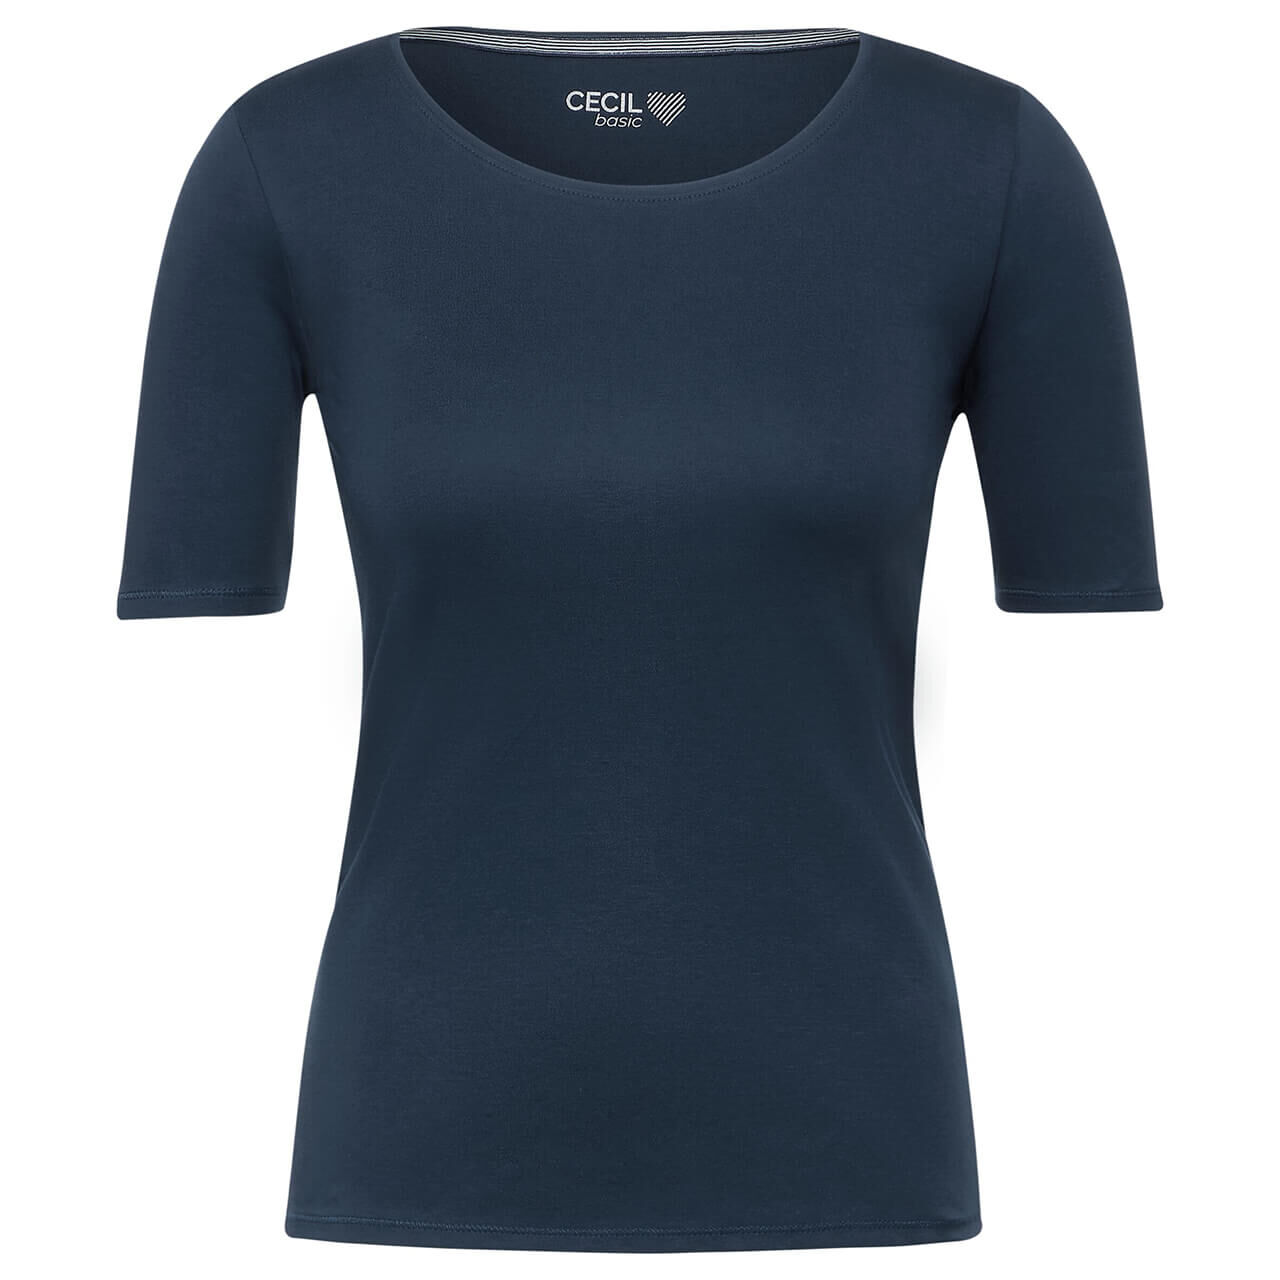 Cecil Damen T-Shirt Lena dark petrol blue